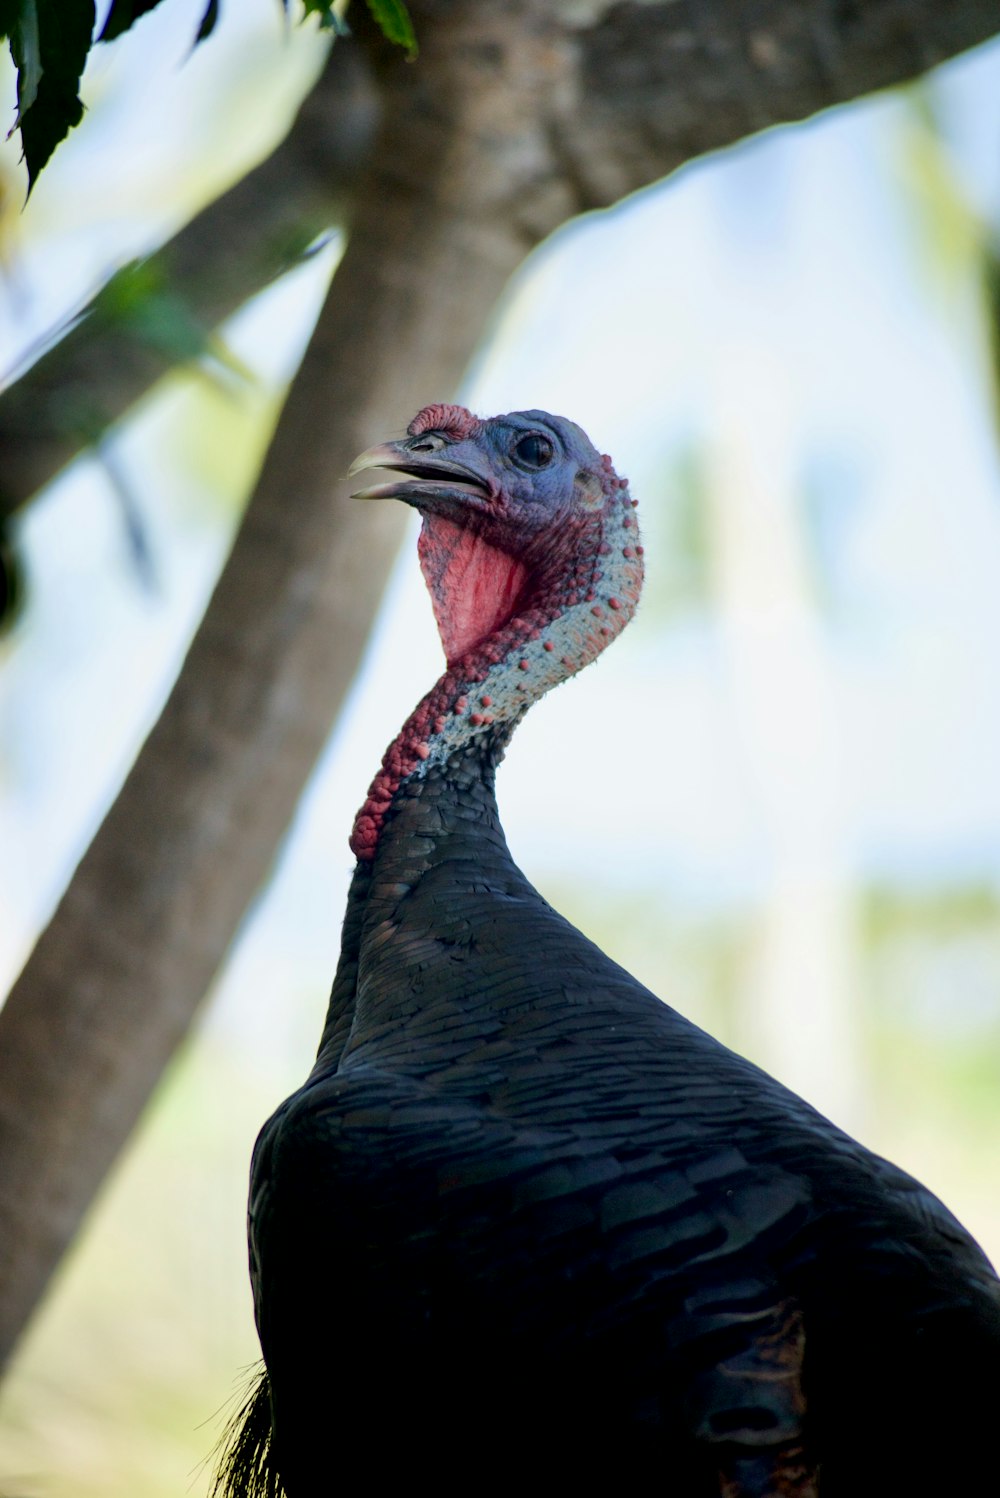 a close up of a turkey near a tree